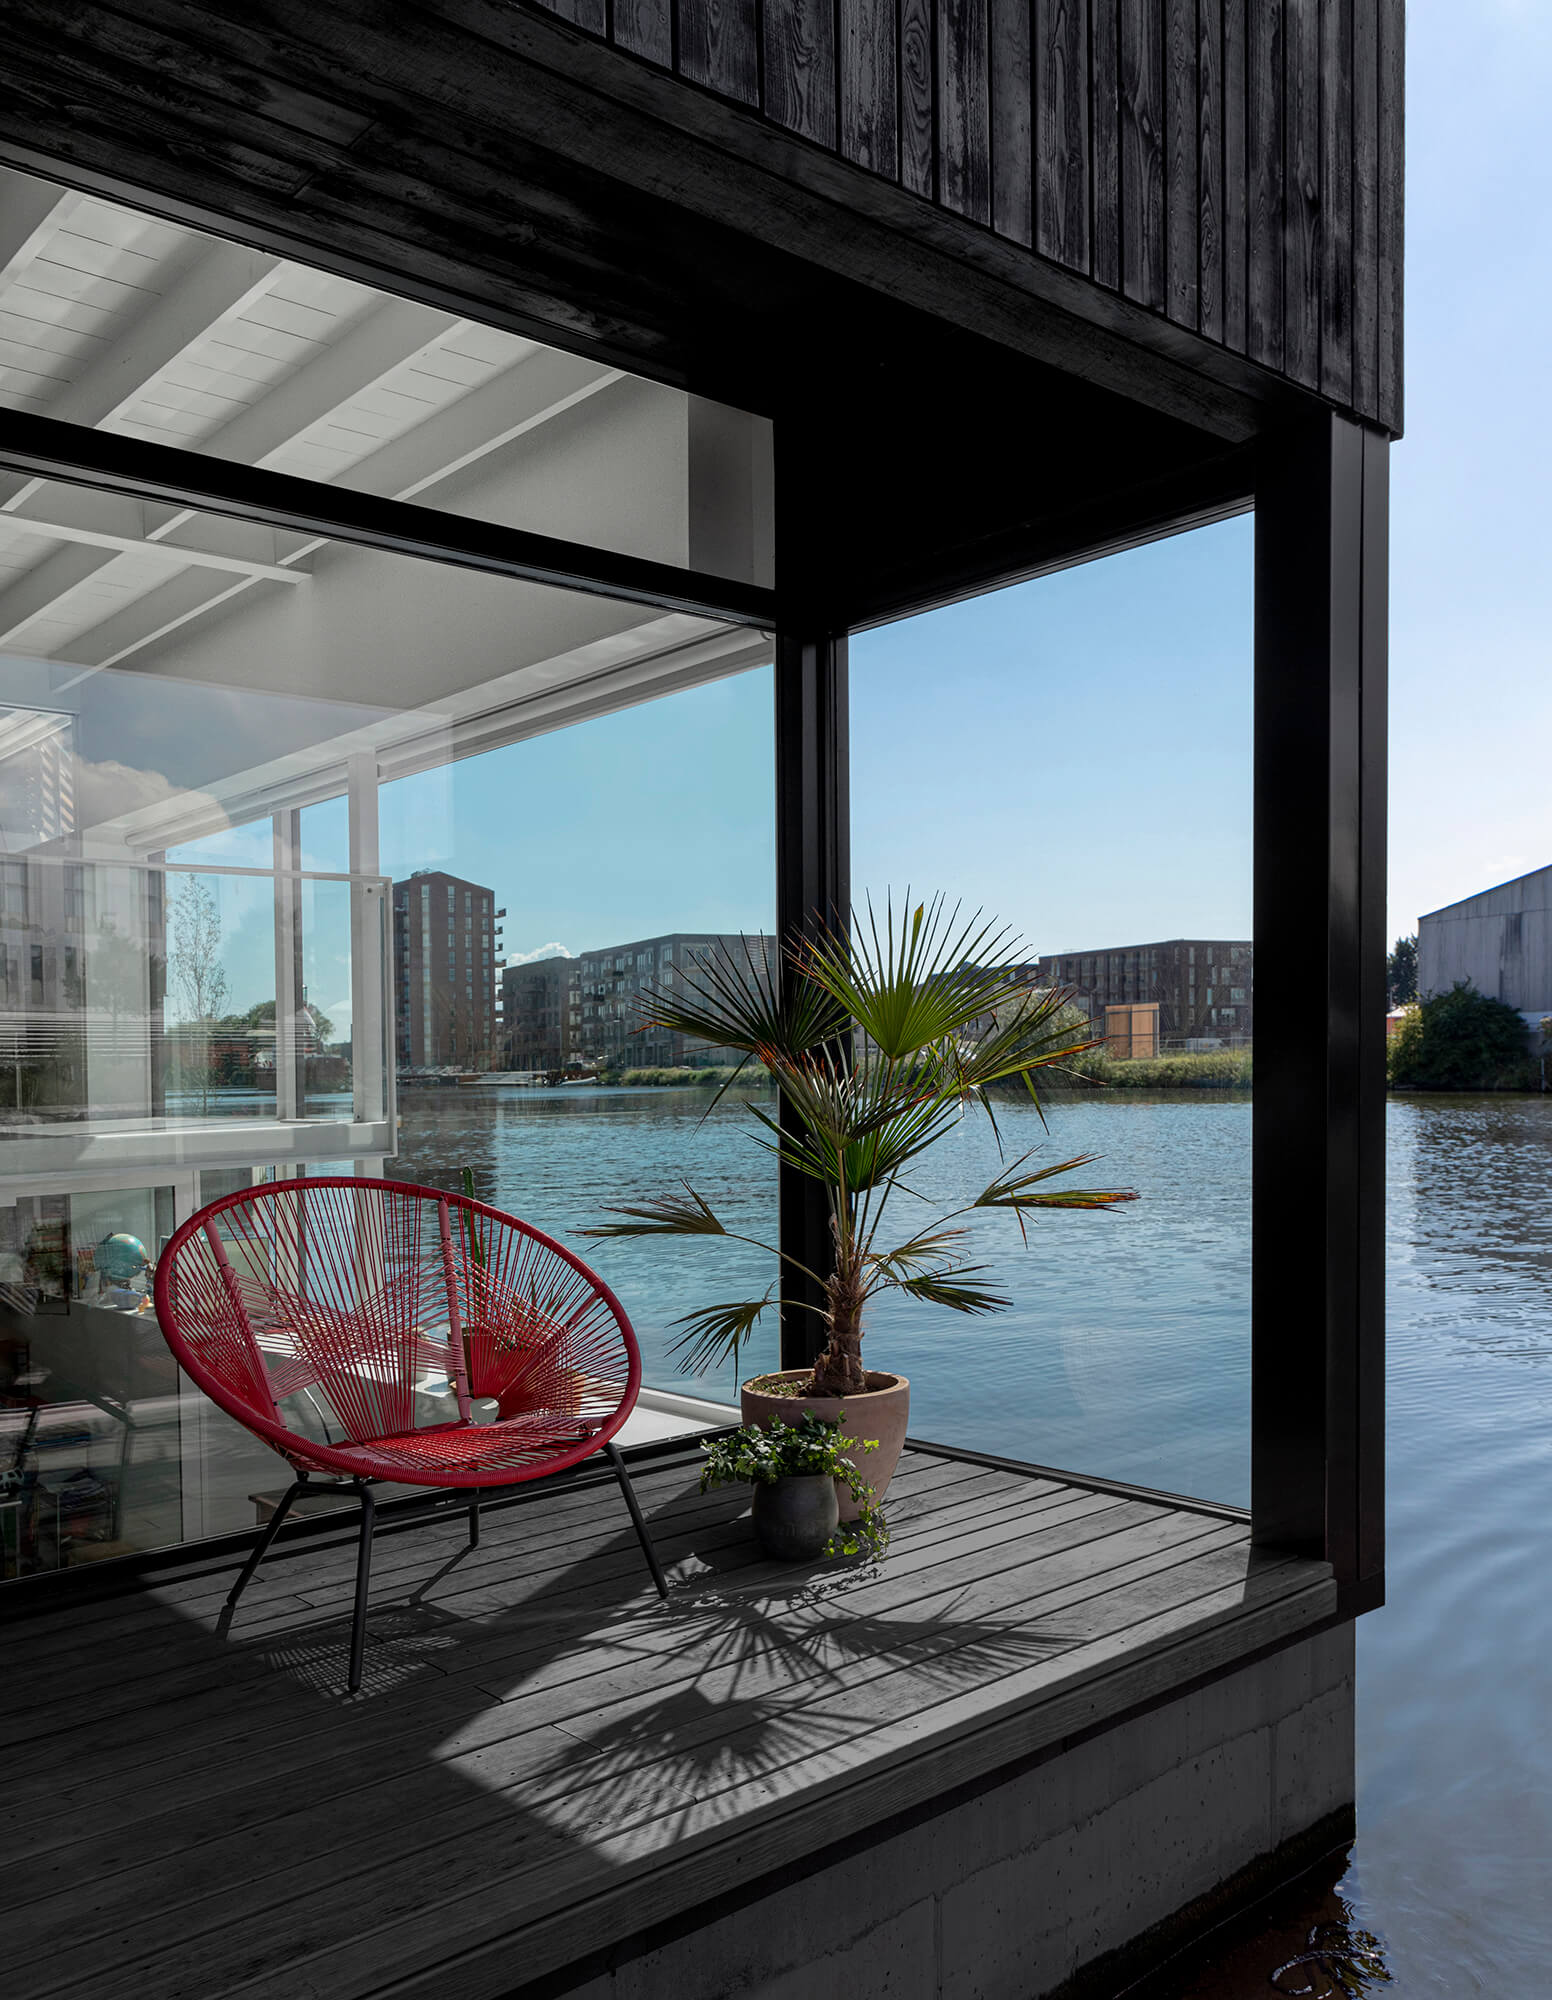 065 HR 20 Floating Home Schoonschip residential exterior terrace i29